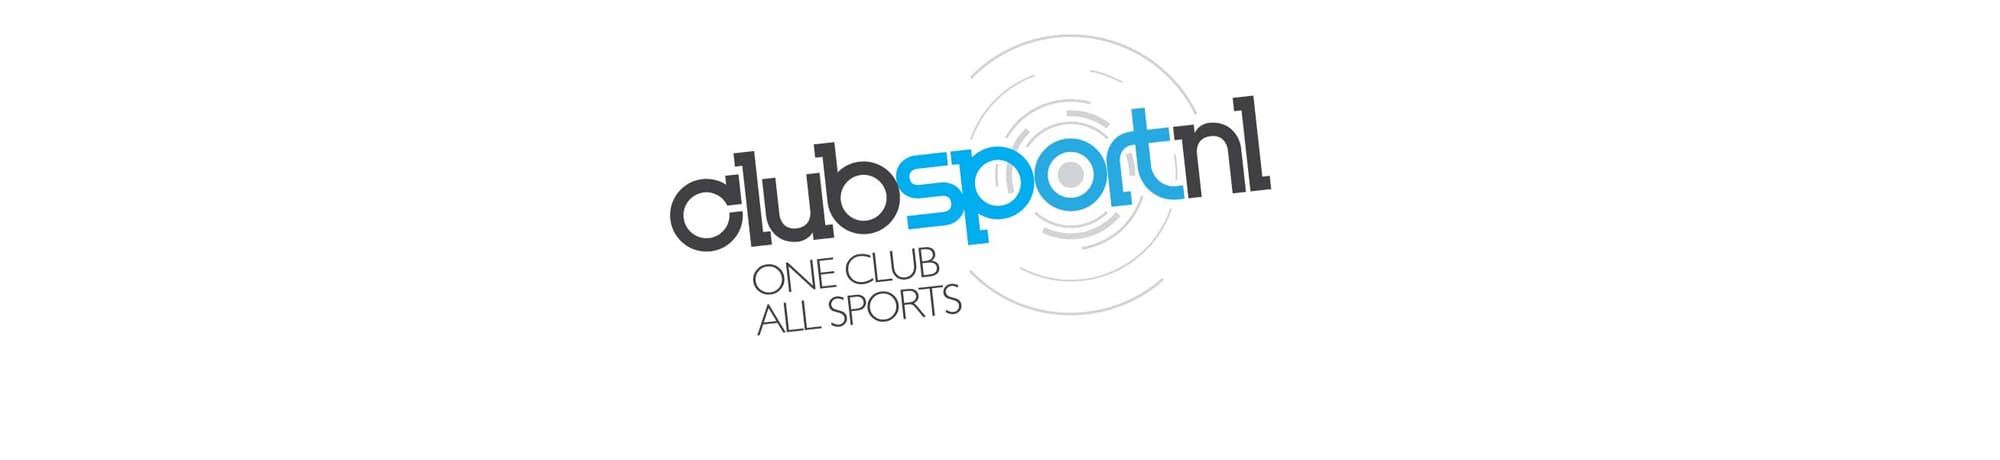 Club Sport NL